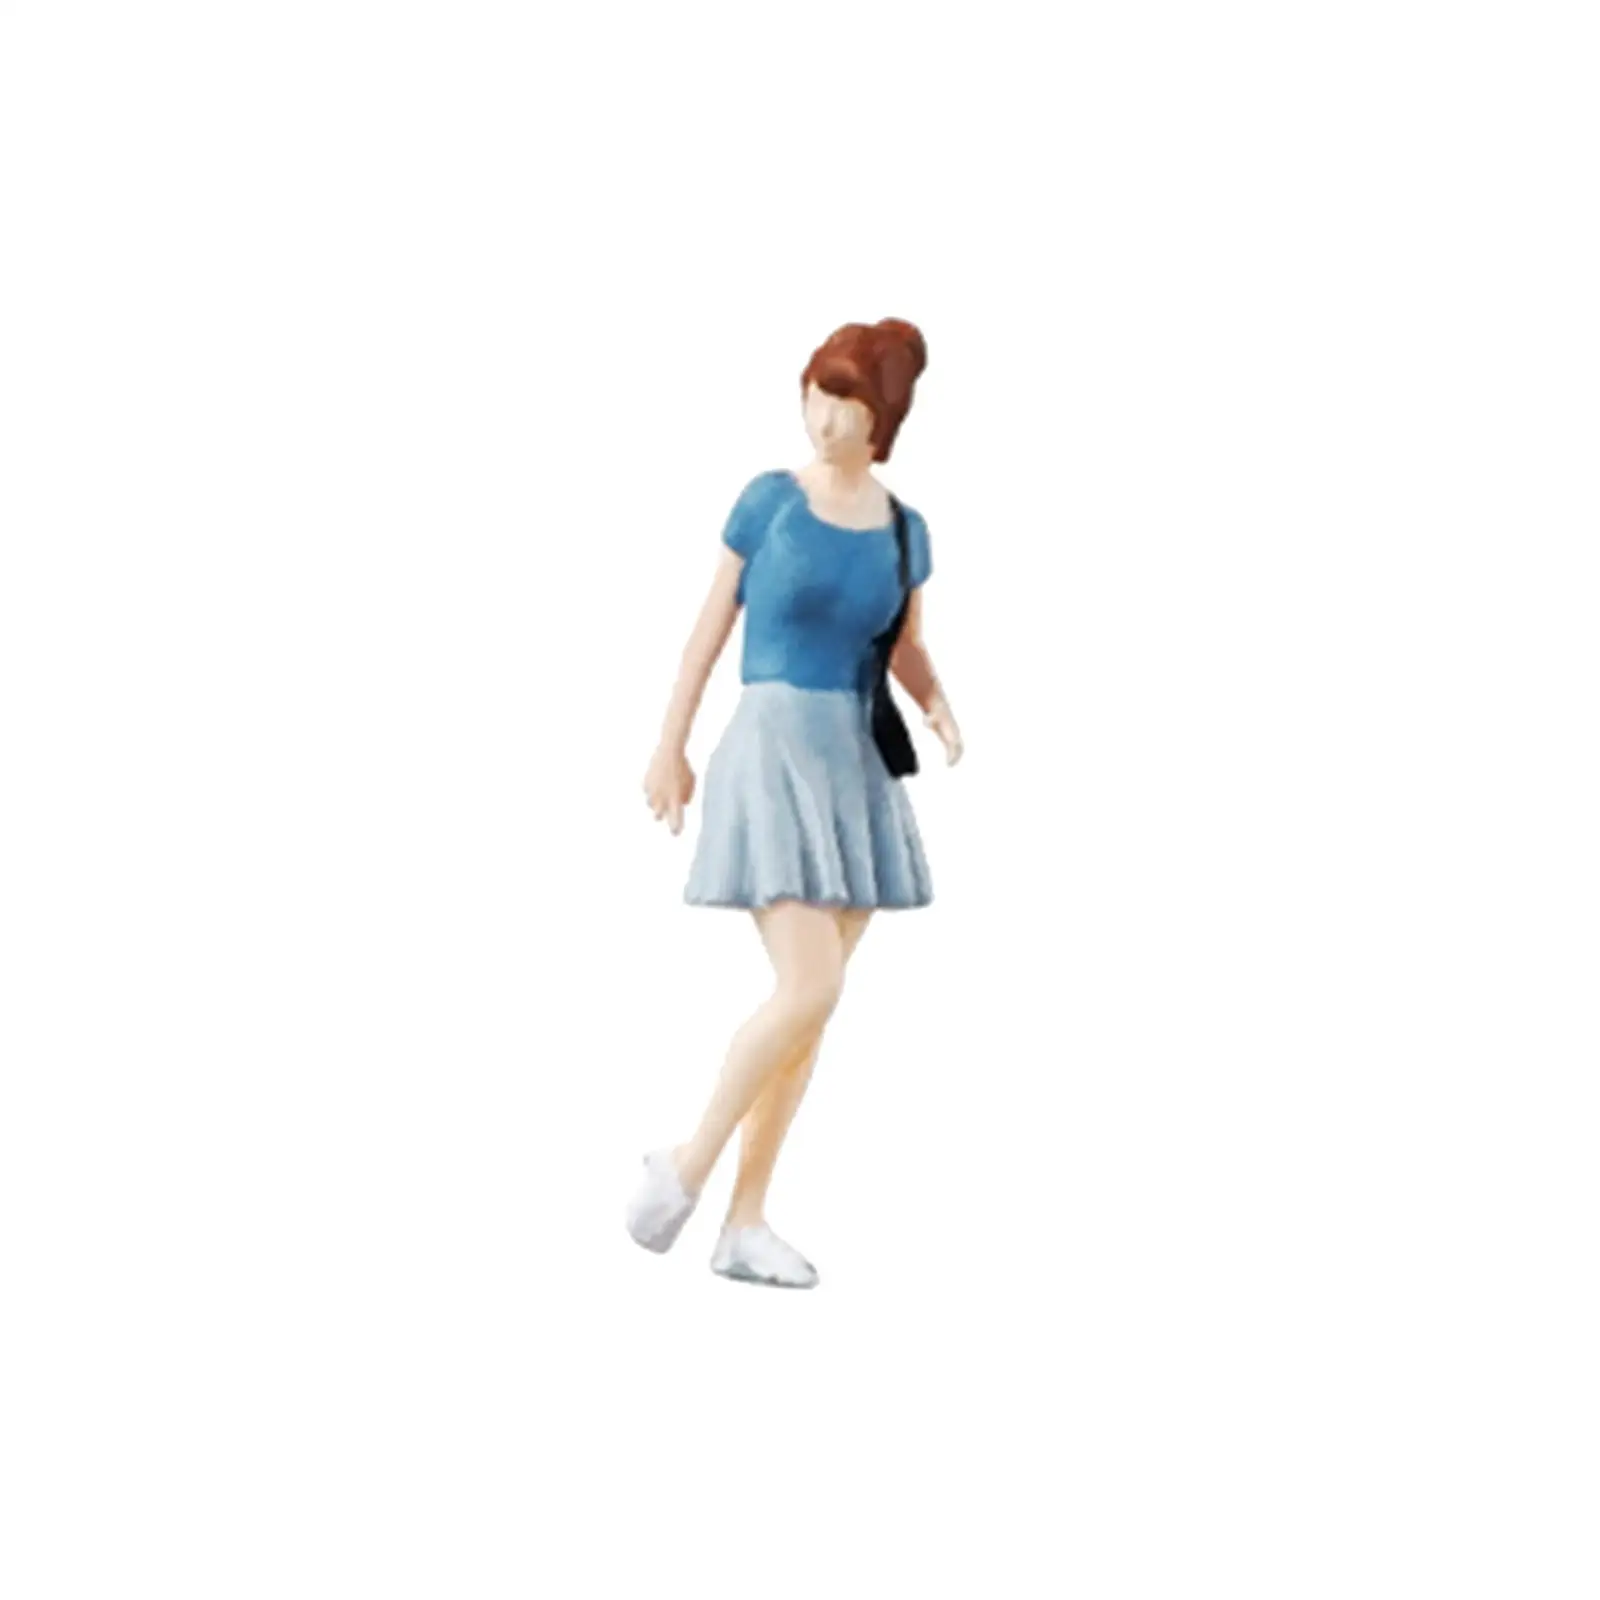 1/64 Scale Miniature Figure Blue Skirt Girl Mini Model Building Kits Doll Toy for DIY Projects Desktop Ornament Fariy Garden